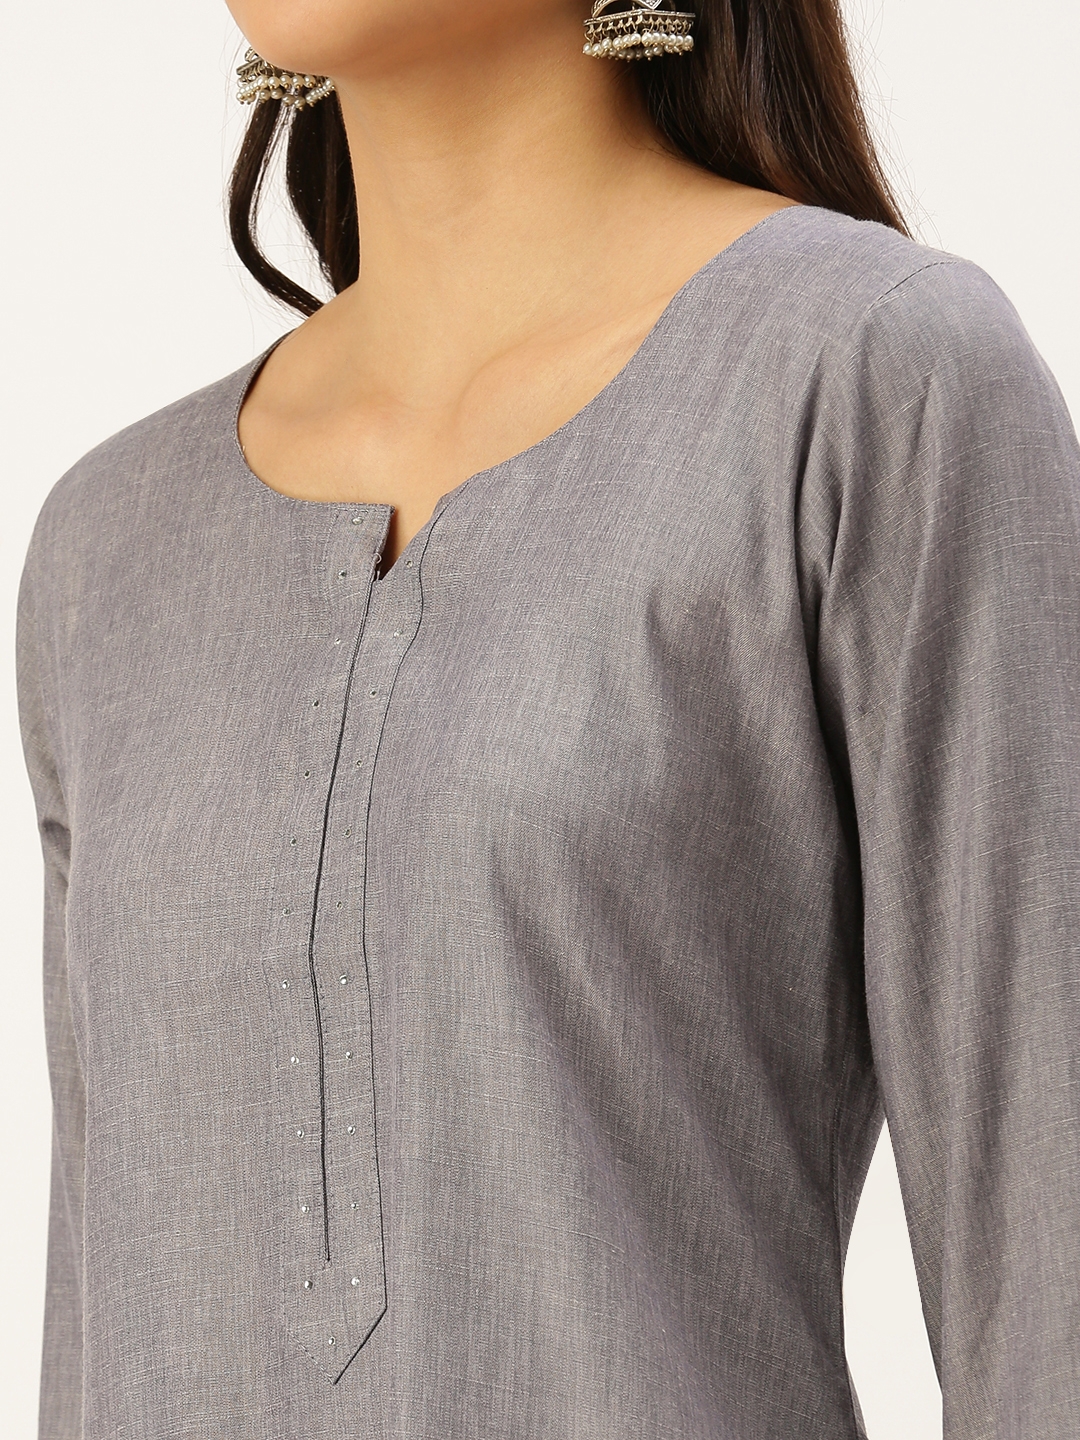 Women's Grey Cotton Embellished Comfort Fit Kurtas